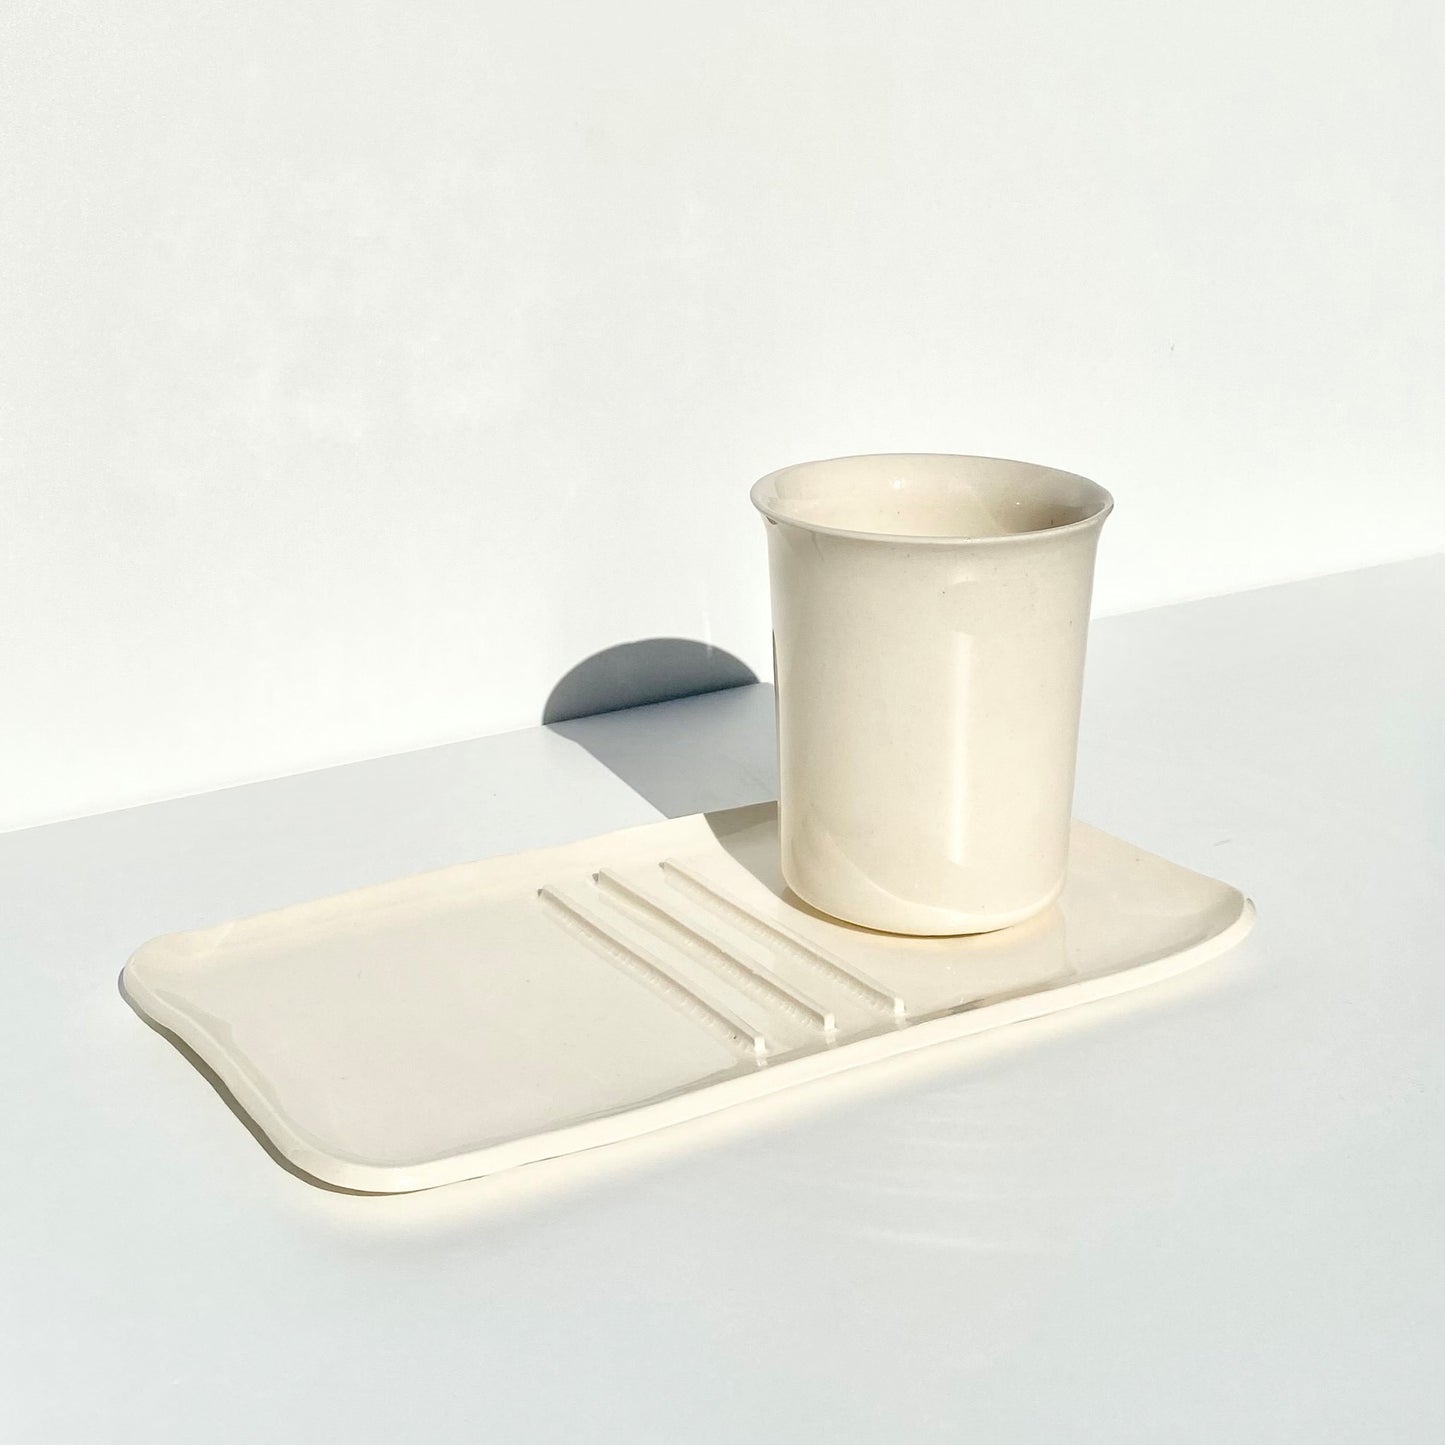 veto_Ceramic Bench Tidy_ceramic storage cup and tray